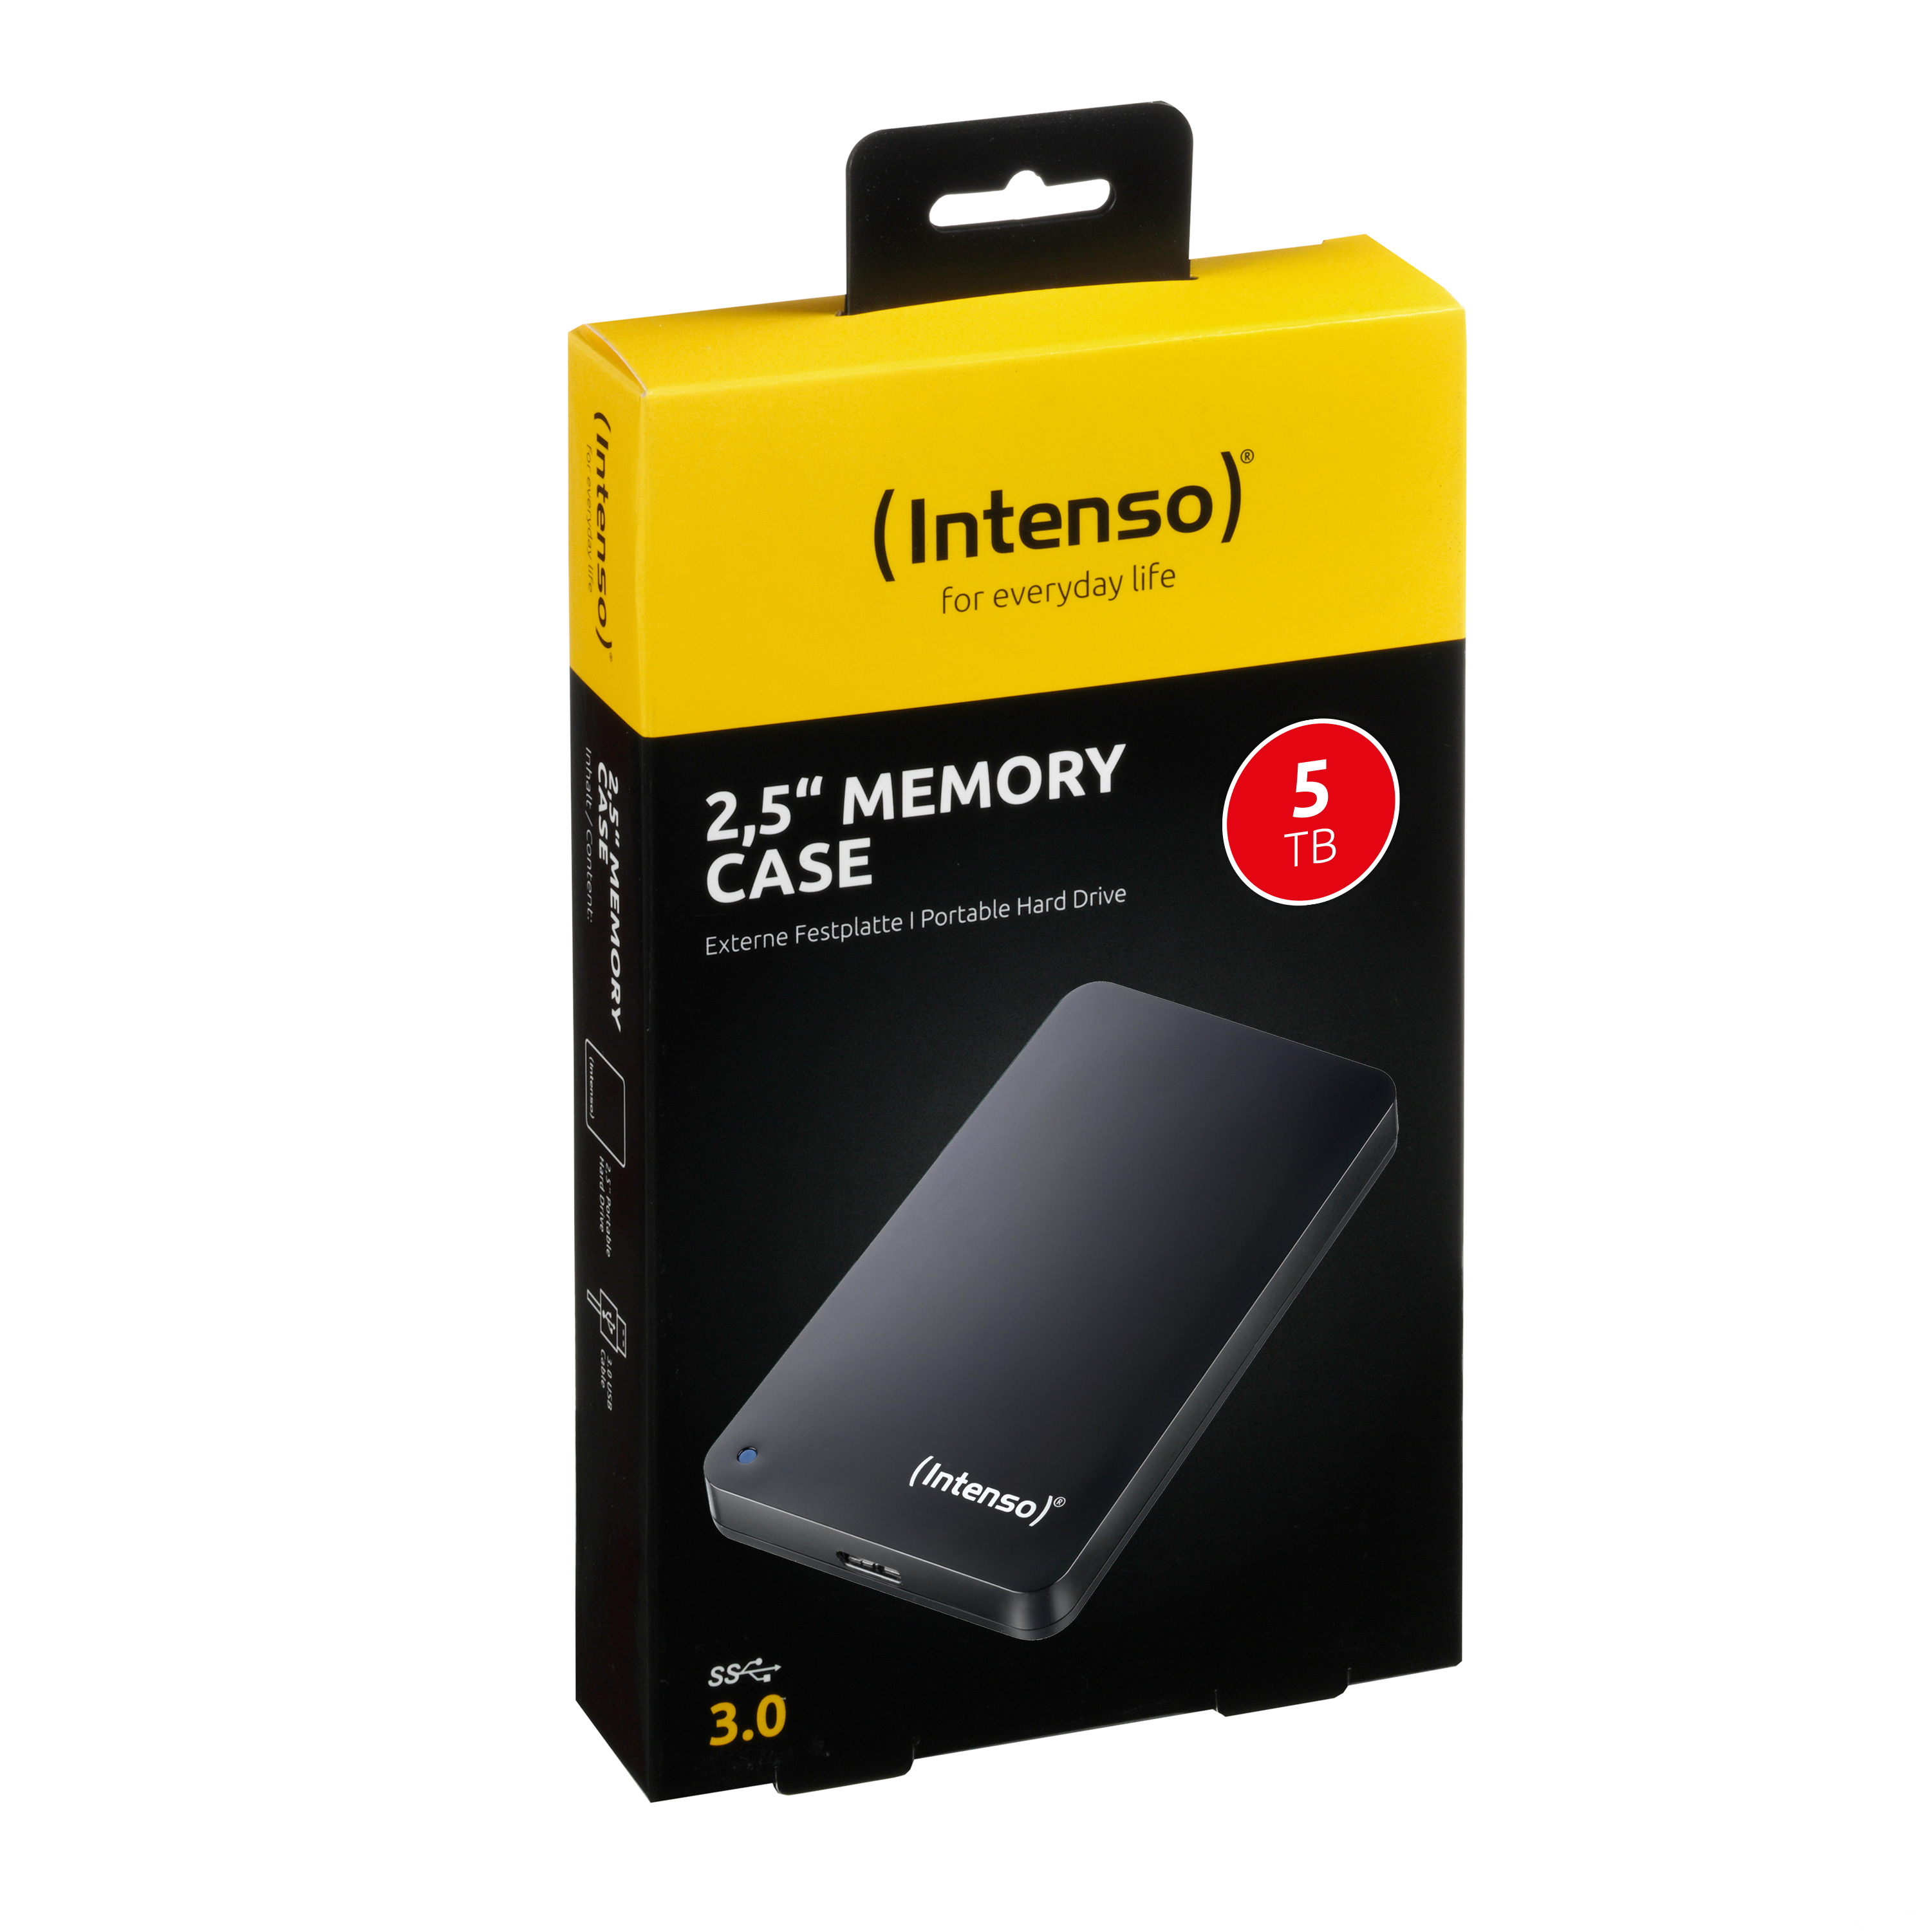 INTENSO Memory Case 5 TB extern, TB, HDD, 2,5 5 Zoll, Schwarz